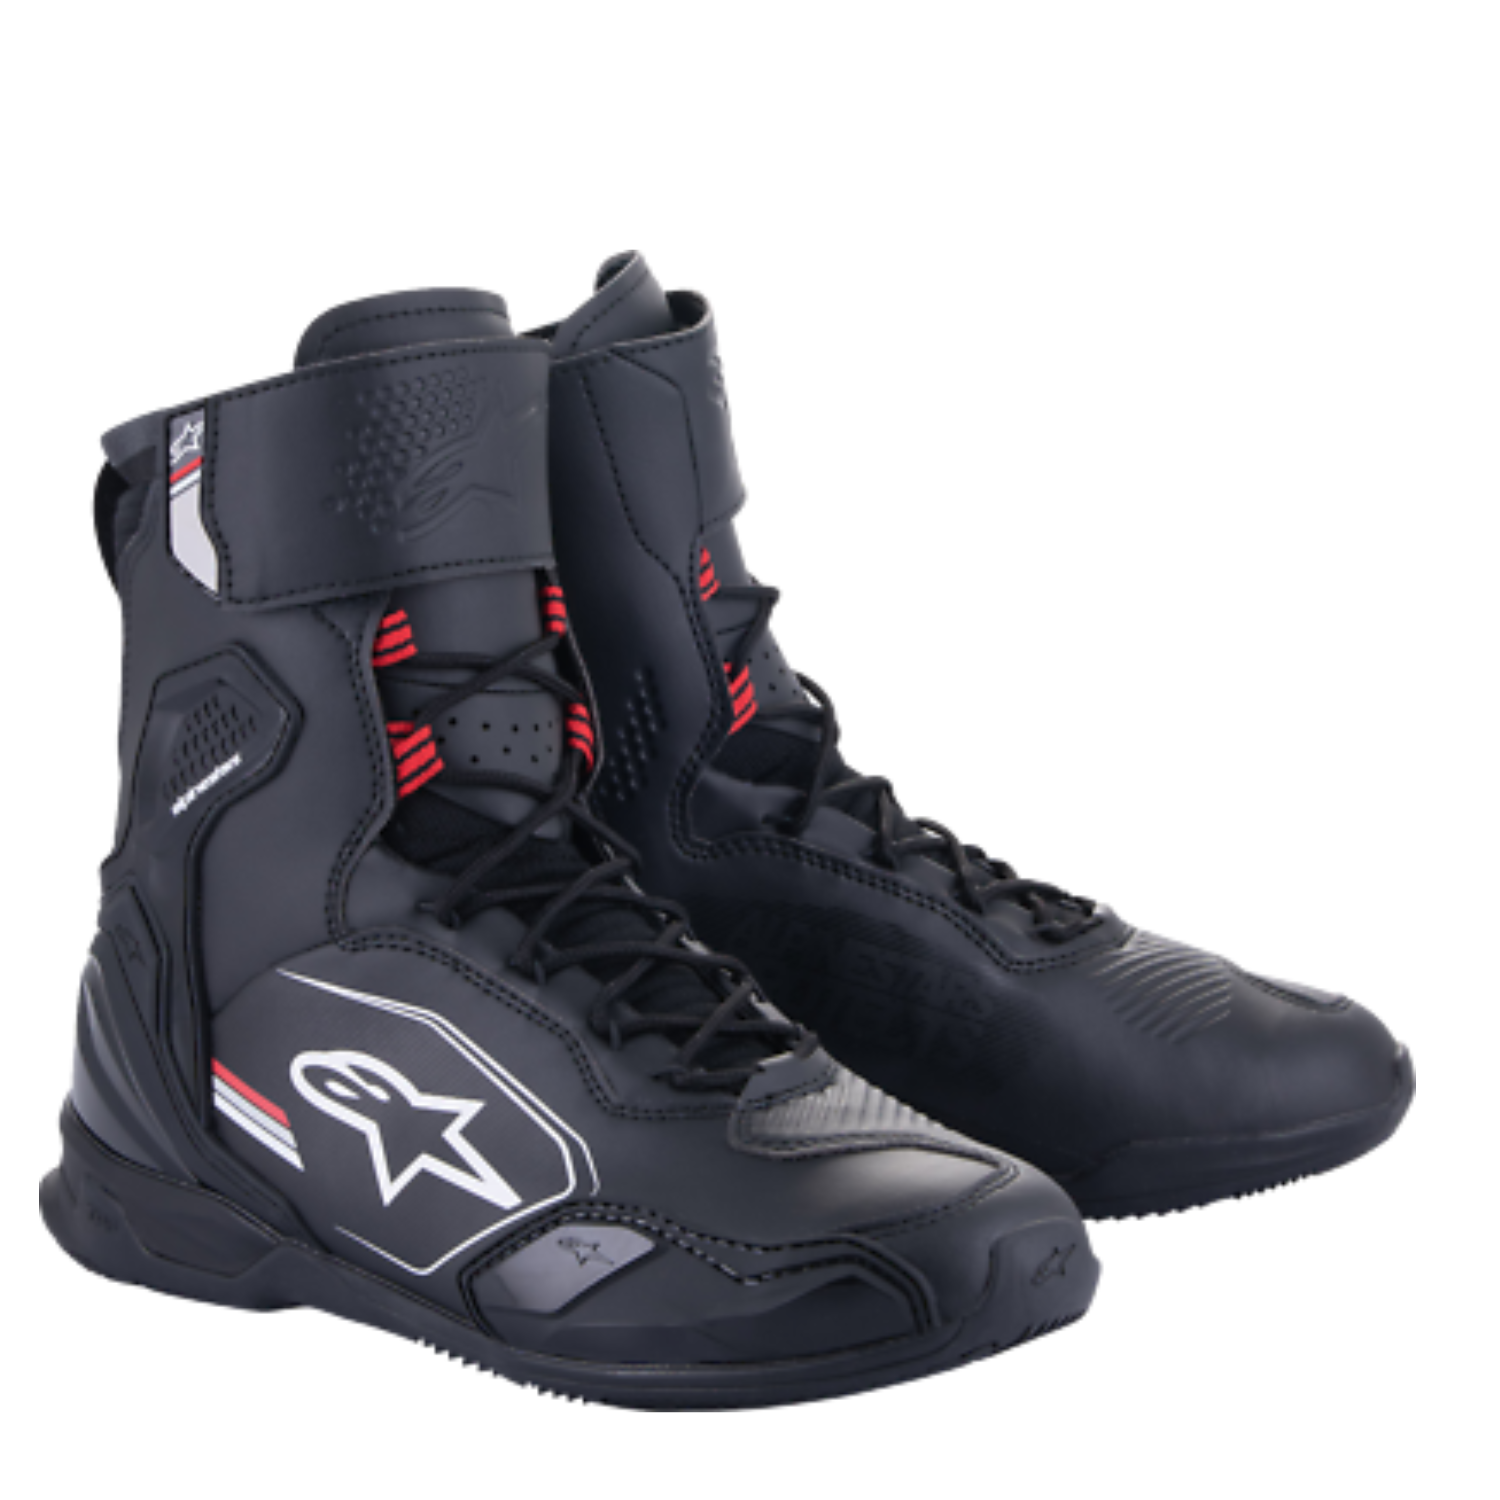 Image of Alpinestars Superfaster Shoes Black Gray Bright Red Größe US 11